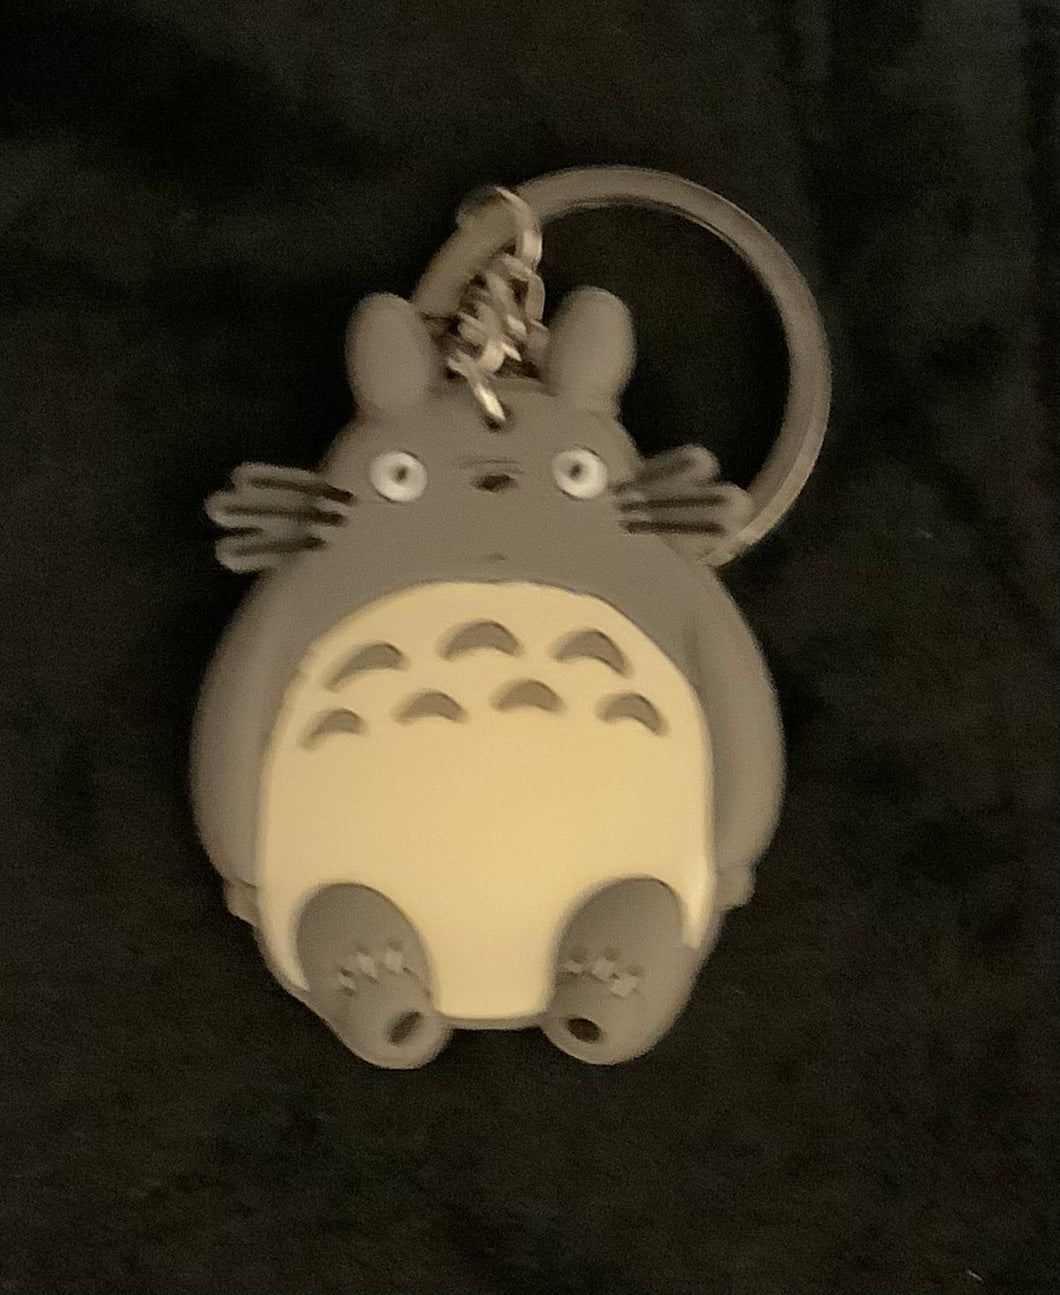 Totoro keychain